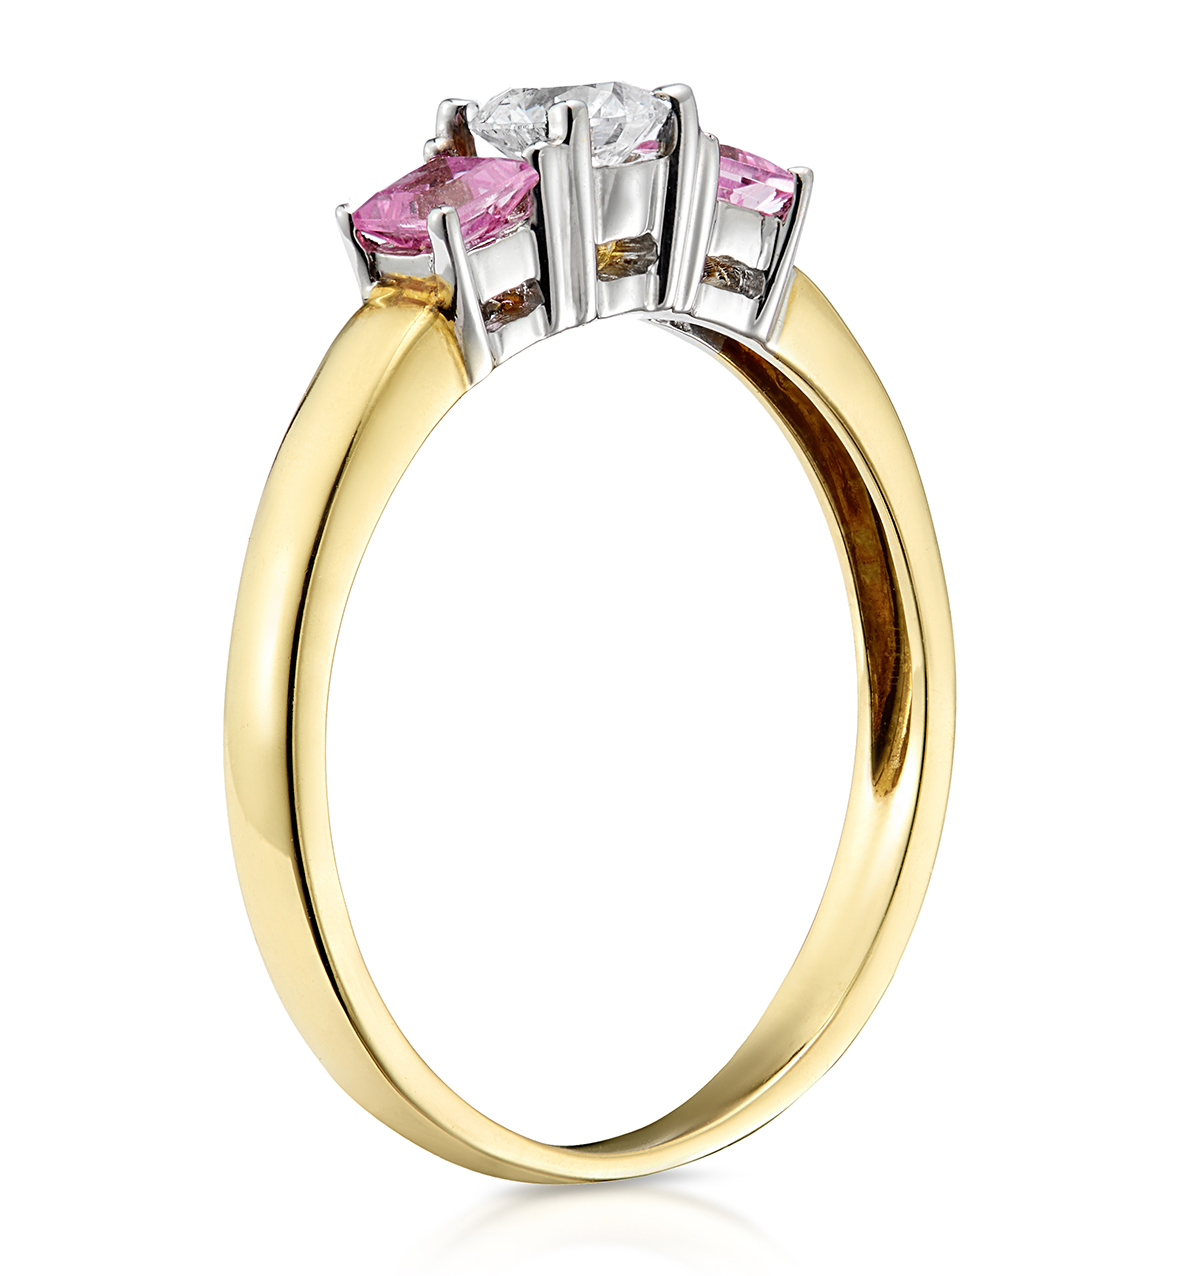 18K Gold Diamond Pink Sapphire Ring 0.25ct